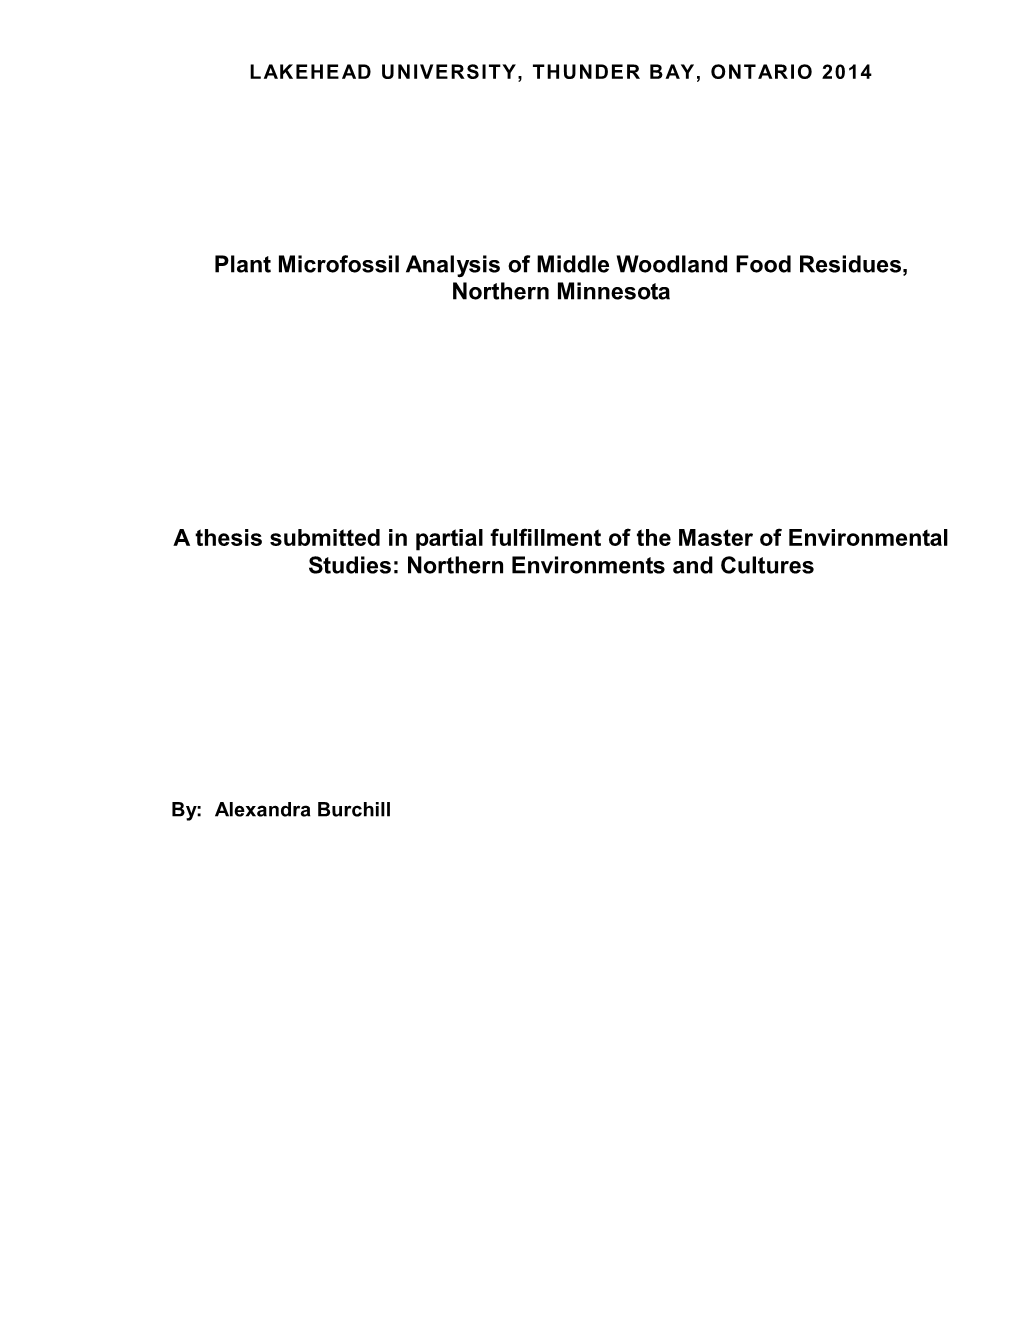 Master of Environmental Studies (NECU) Lakehead University